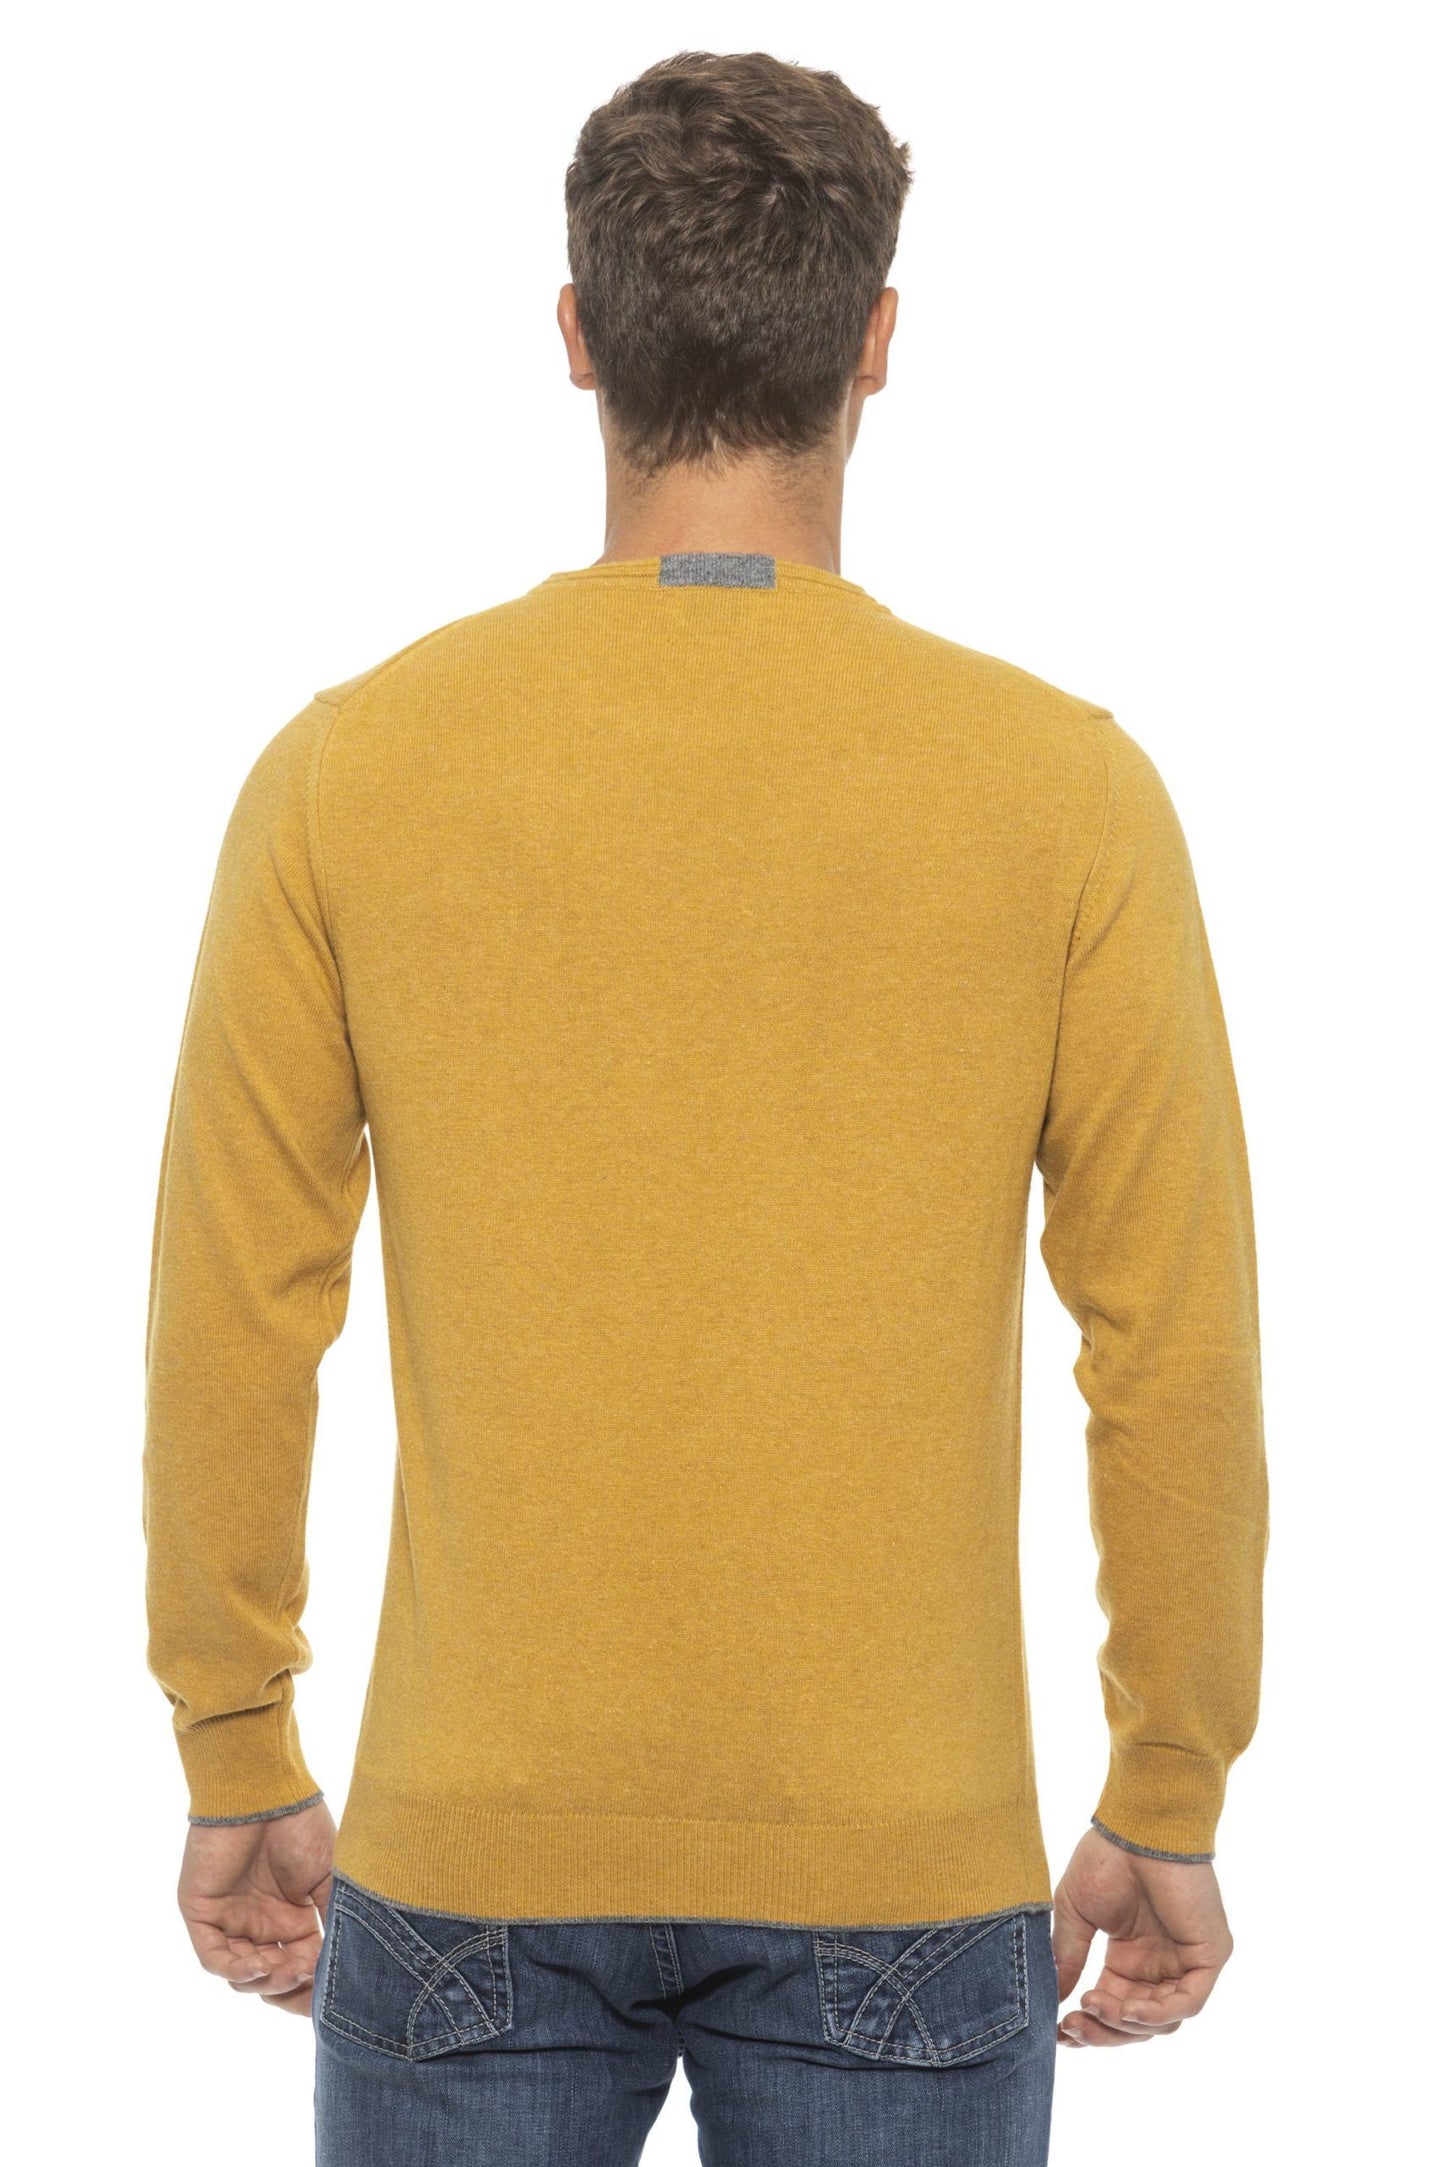 Sunshine Yellow Crew Neck Sweater - Winter Essential